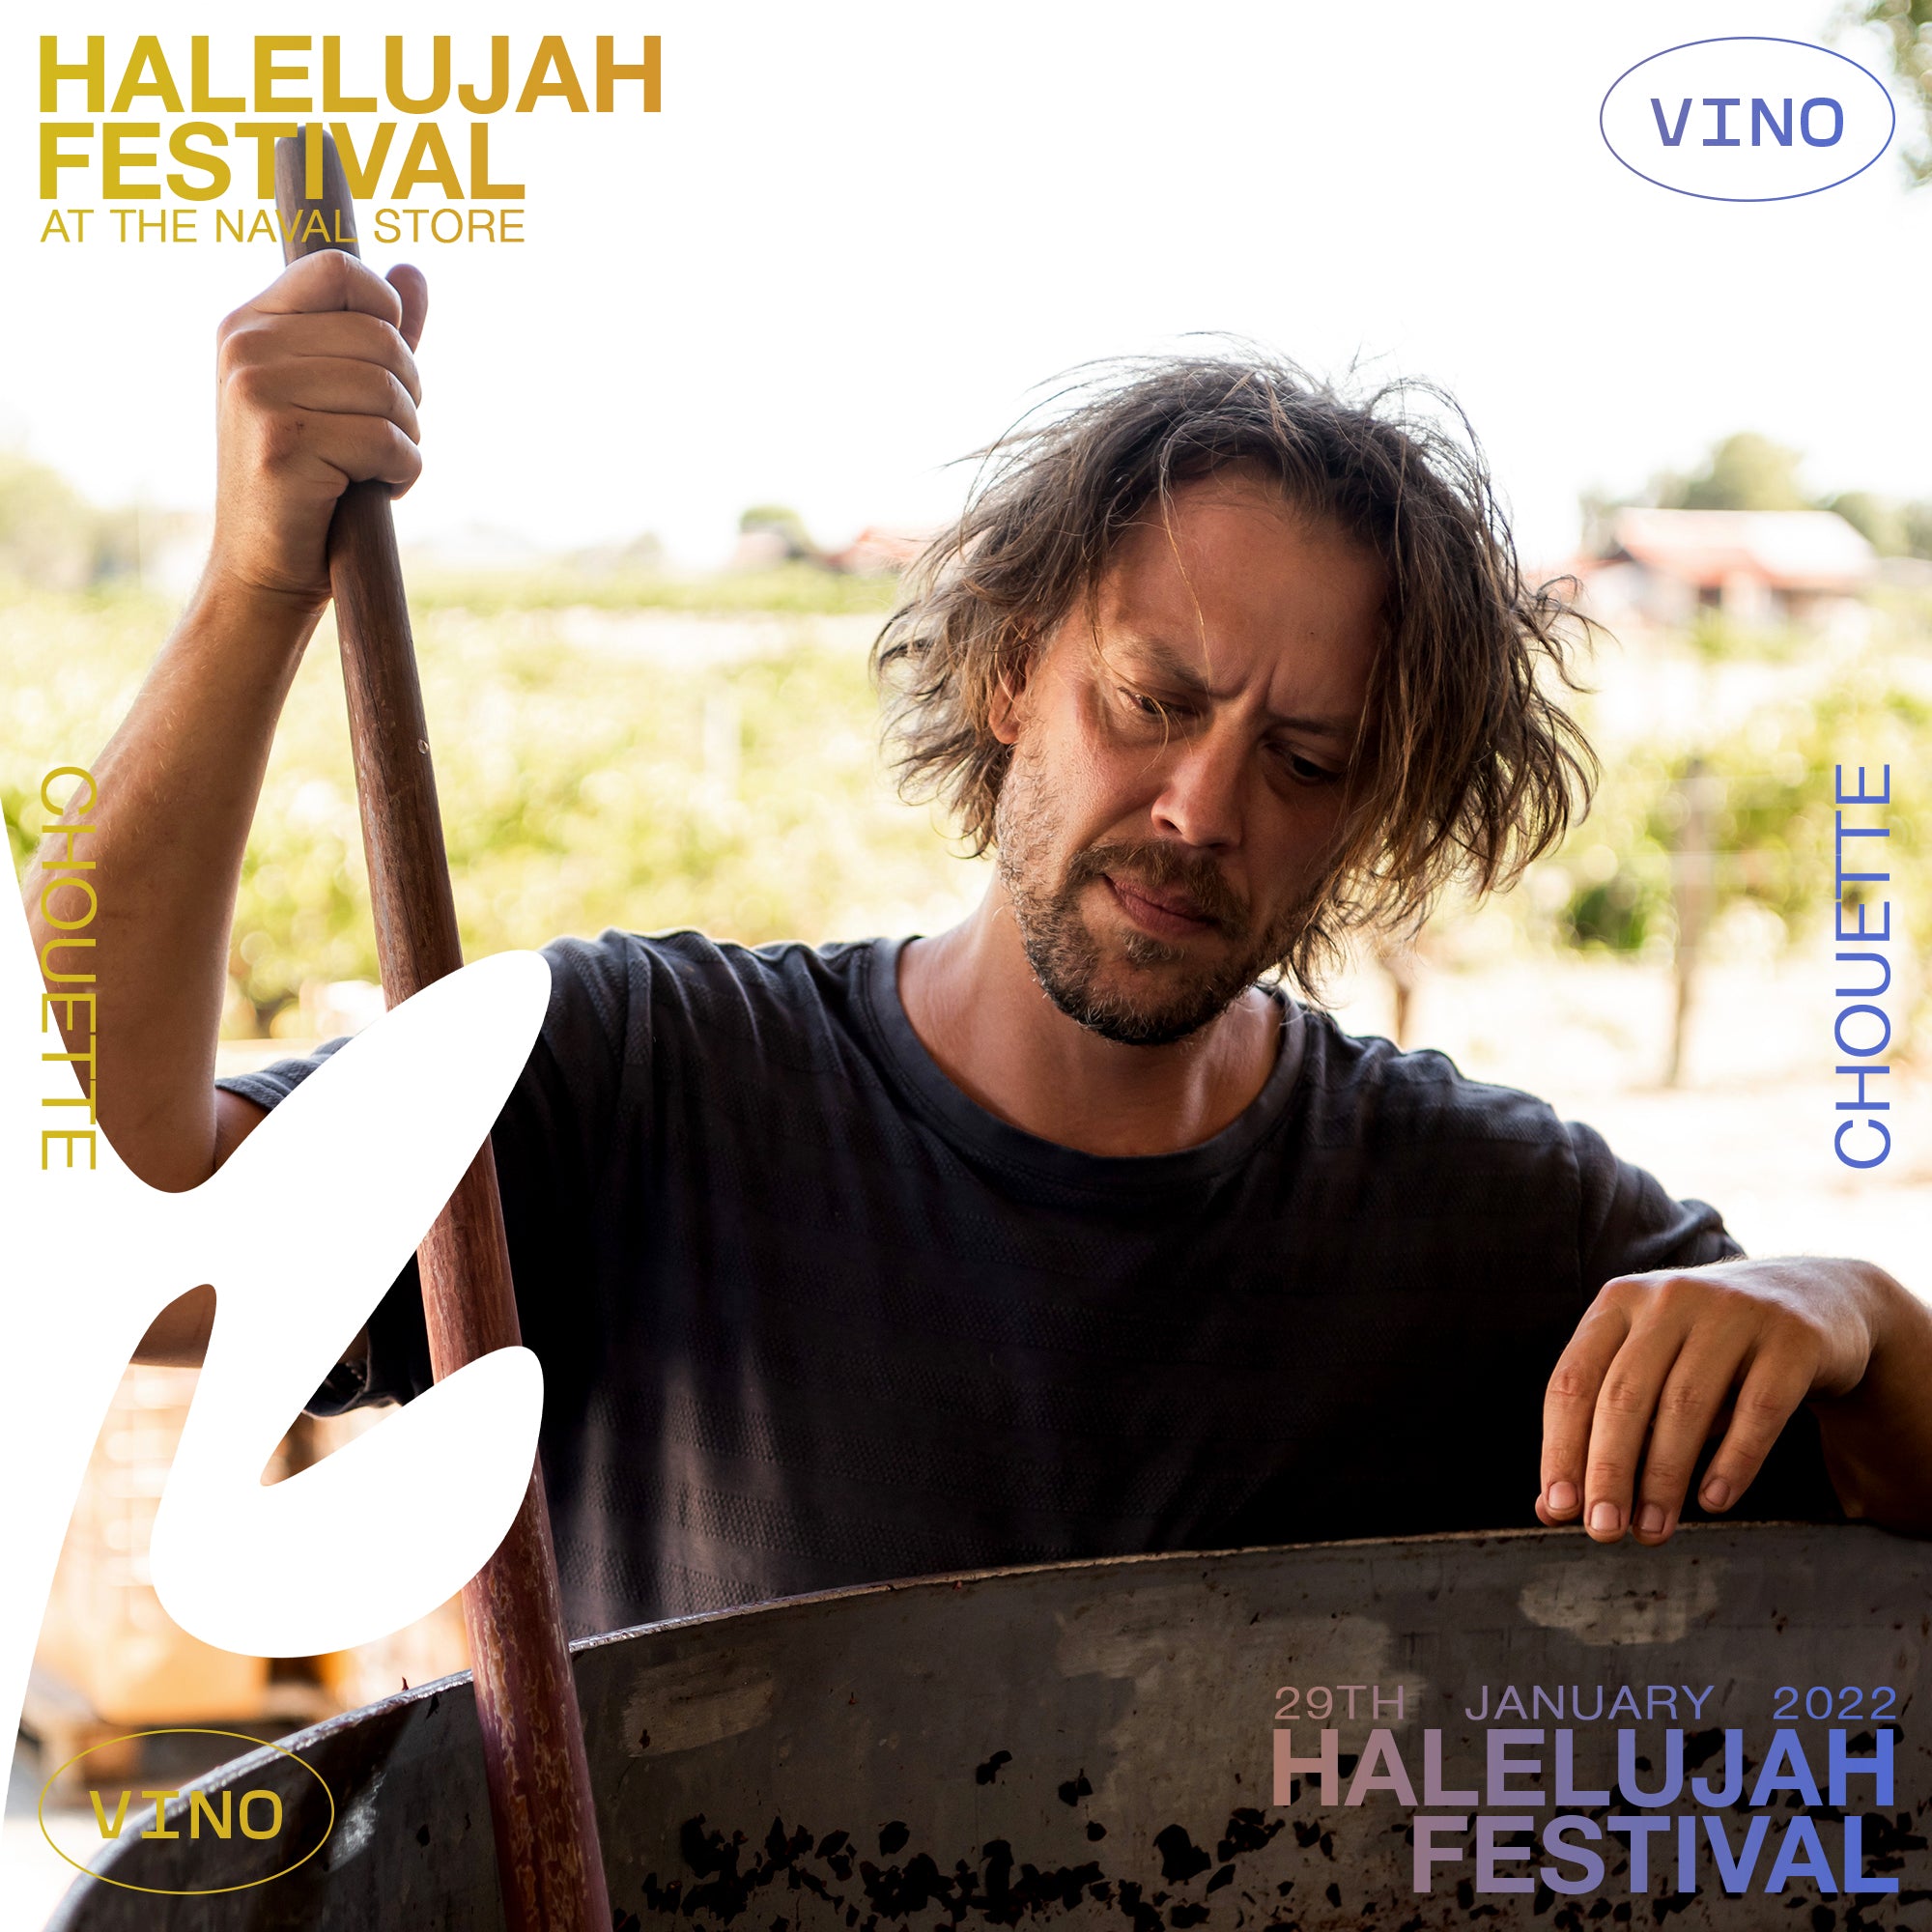 HALELUJAH ARTIST - CHOUETTE